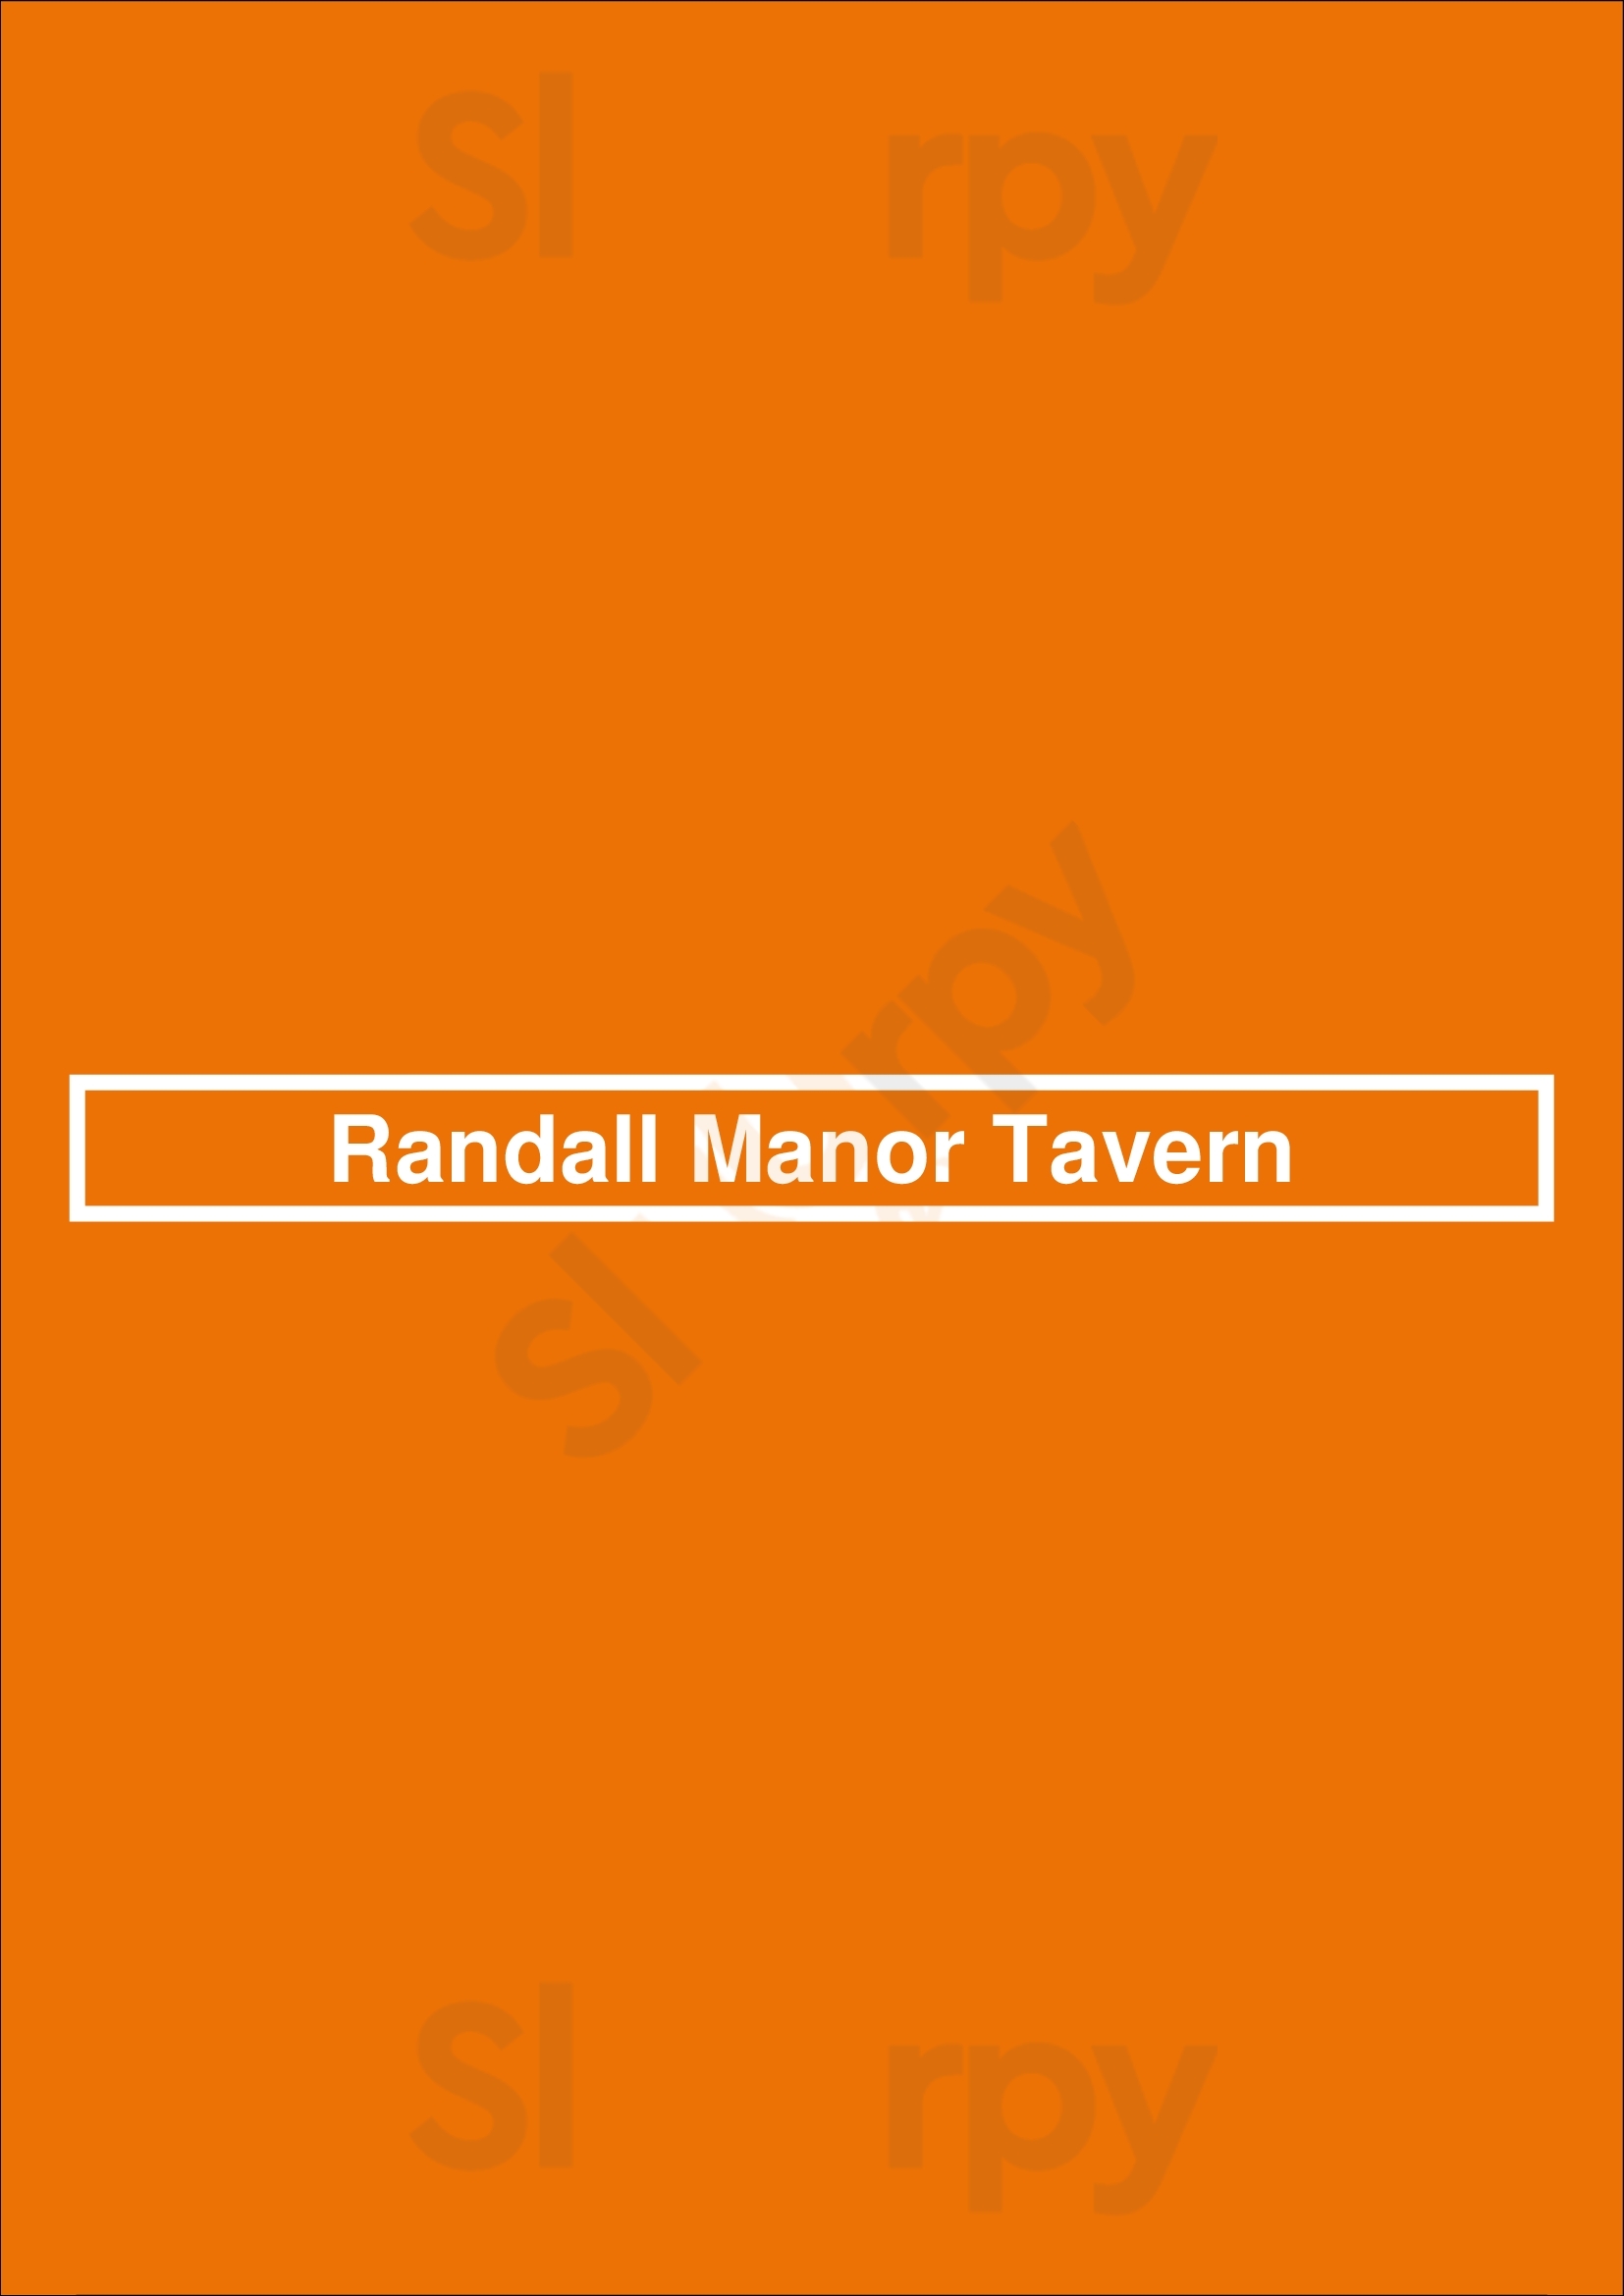 Randall Manor Tavern Staten Island Menu - 1